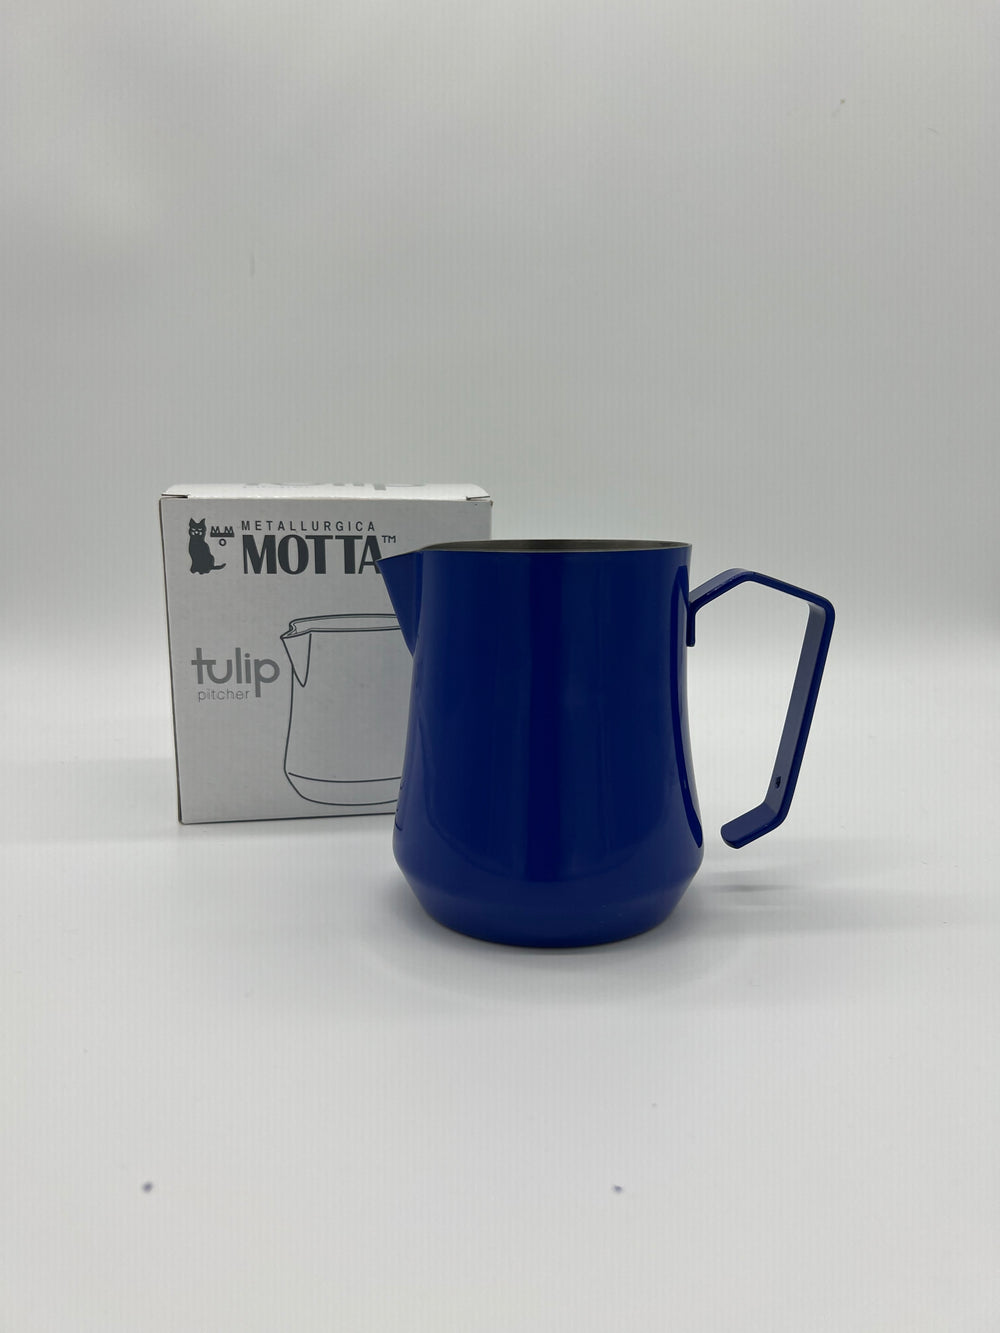 MOTTA Tulip Milk Jug 500ml - BLUE